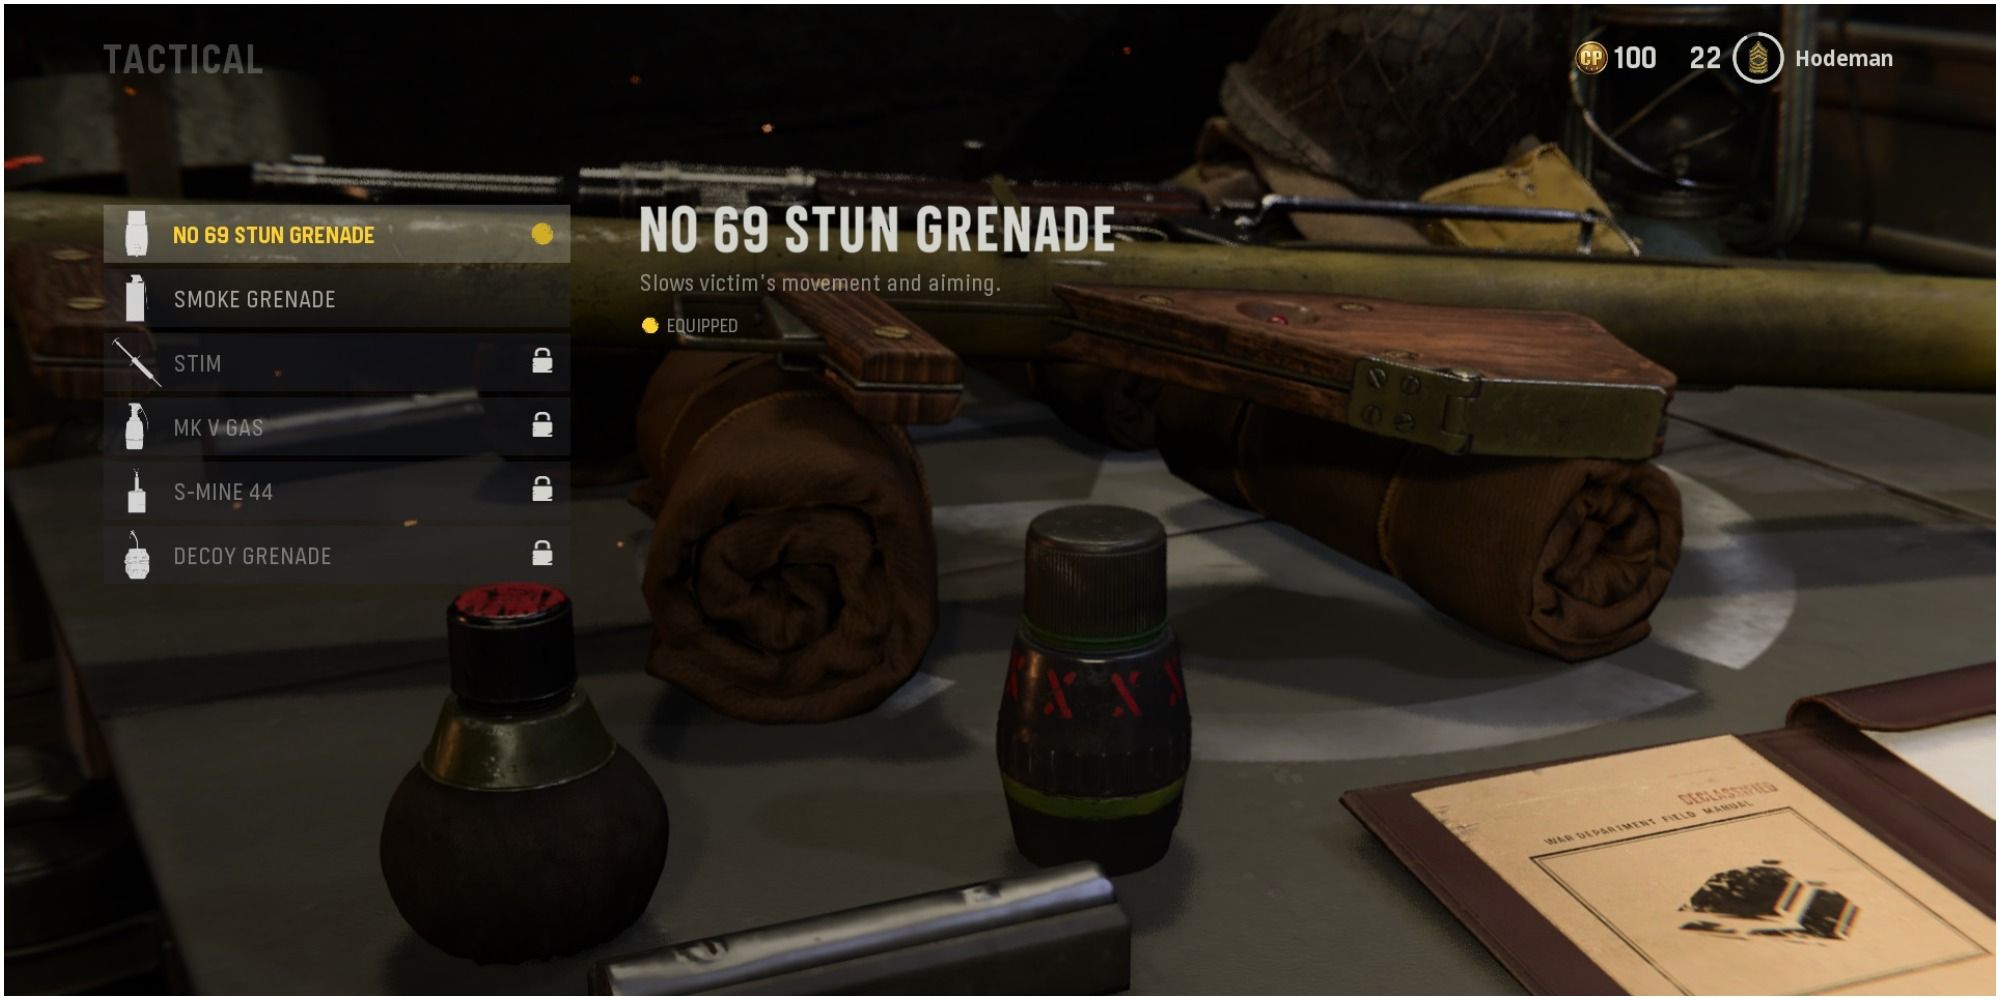 Call Of Duty Vanguard Description Of The Tactical No 69 Stun Grenade